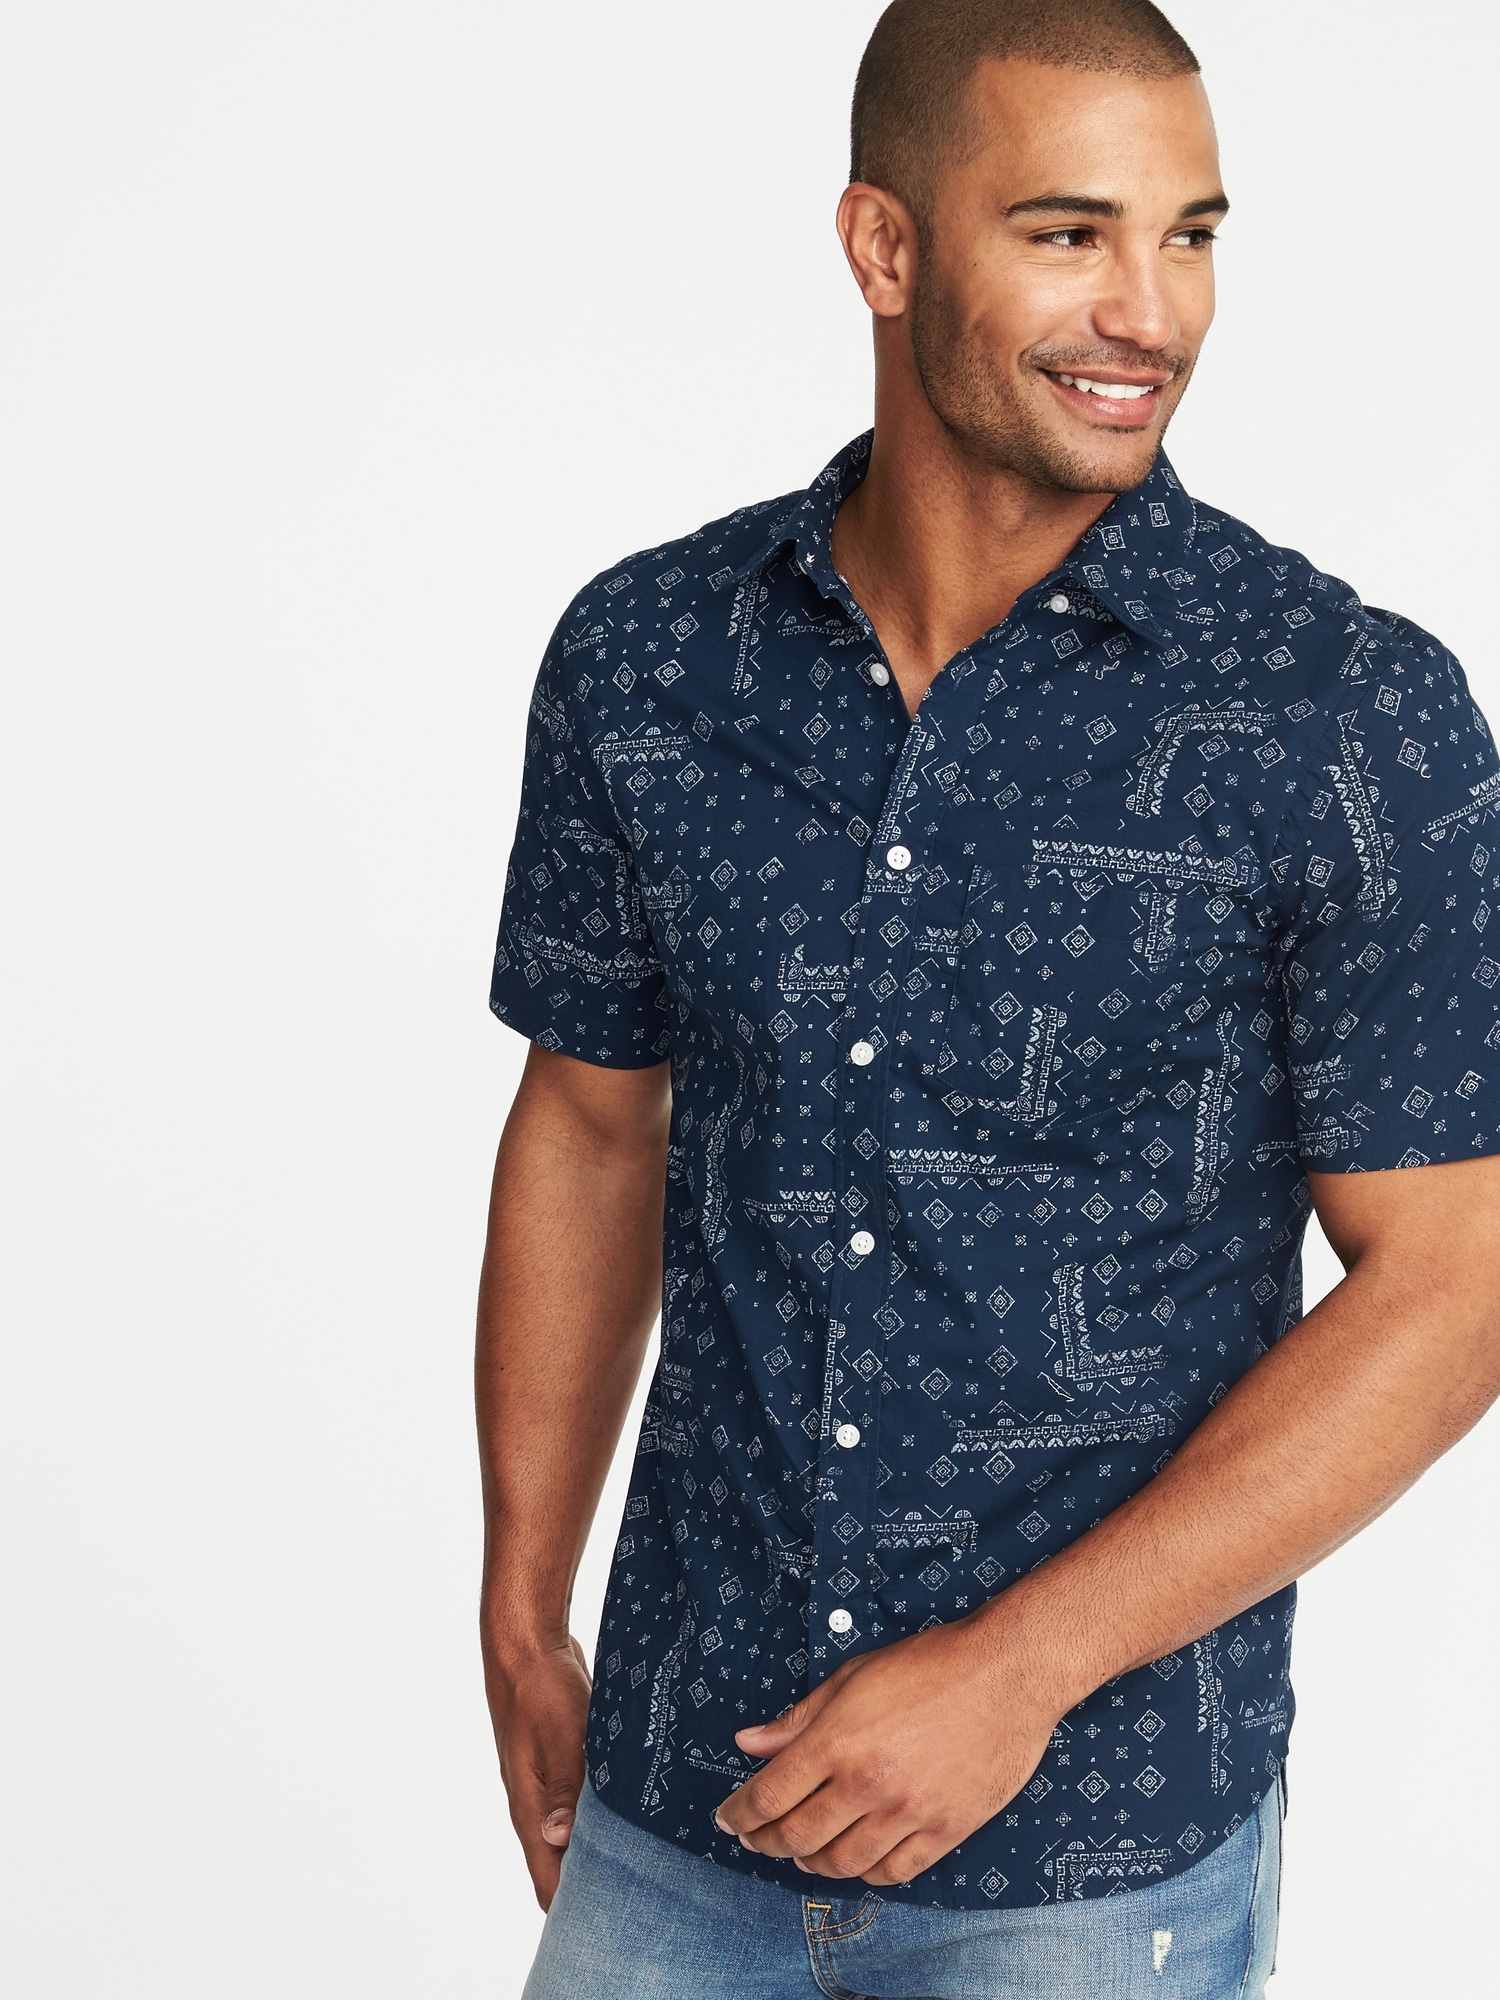 Slim-Fit Built-In Flex Printed Everyday Shirt for Men | Old Navy